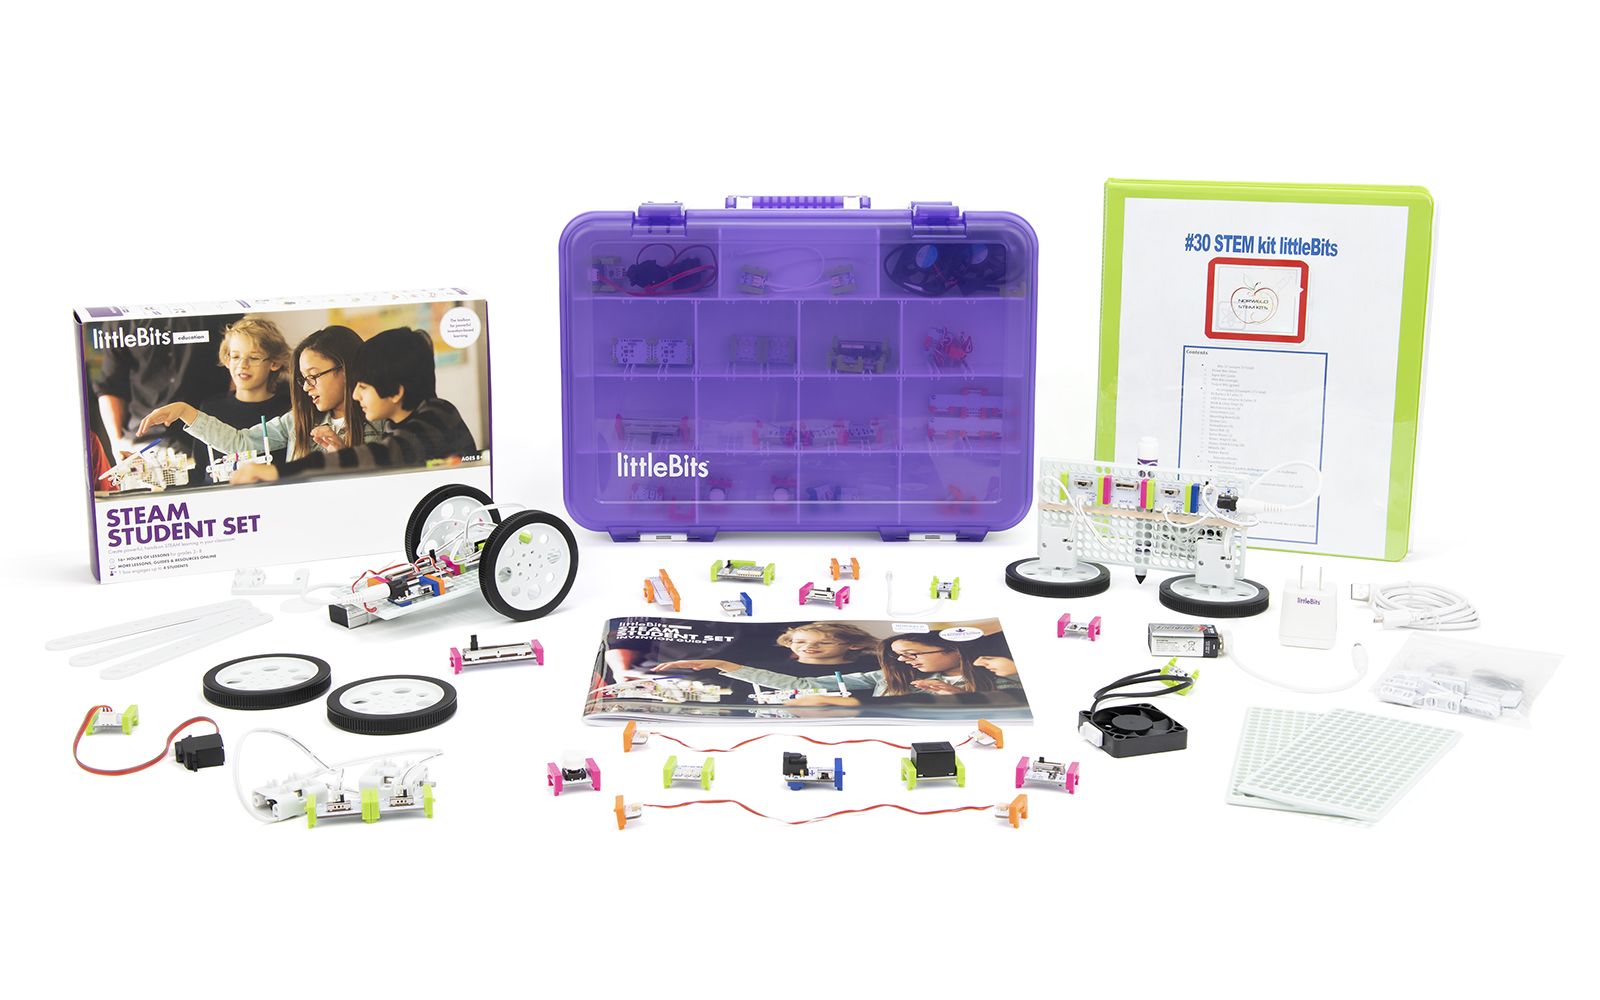 littleBits STEAM Set contents